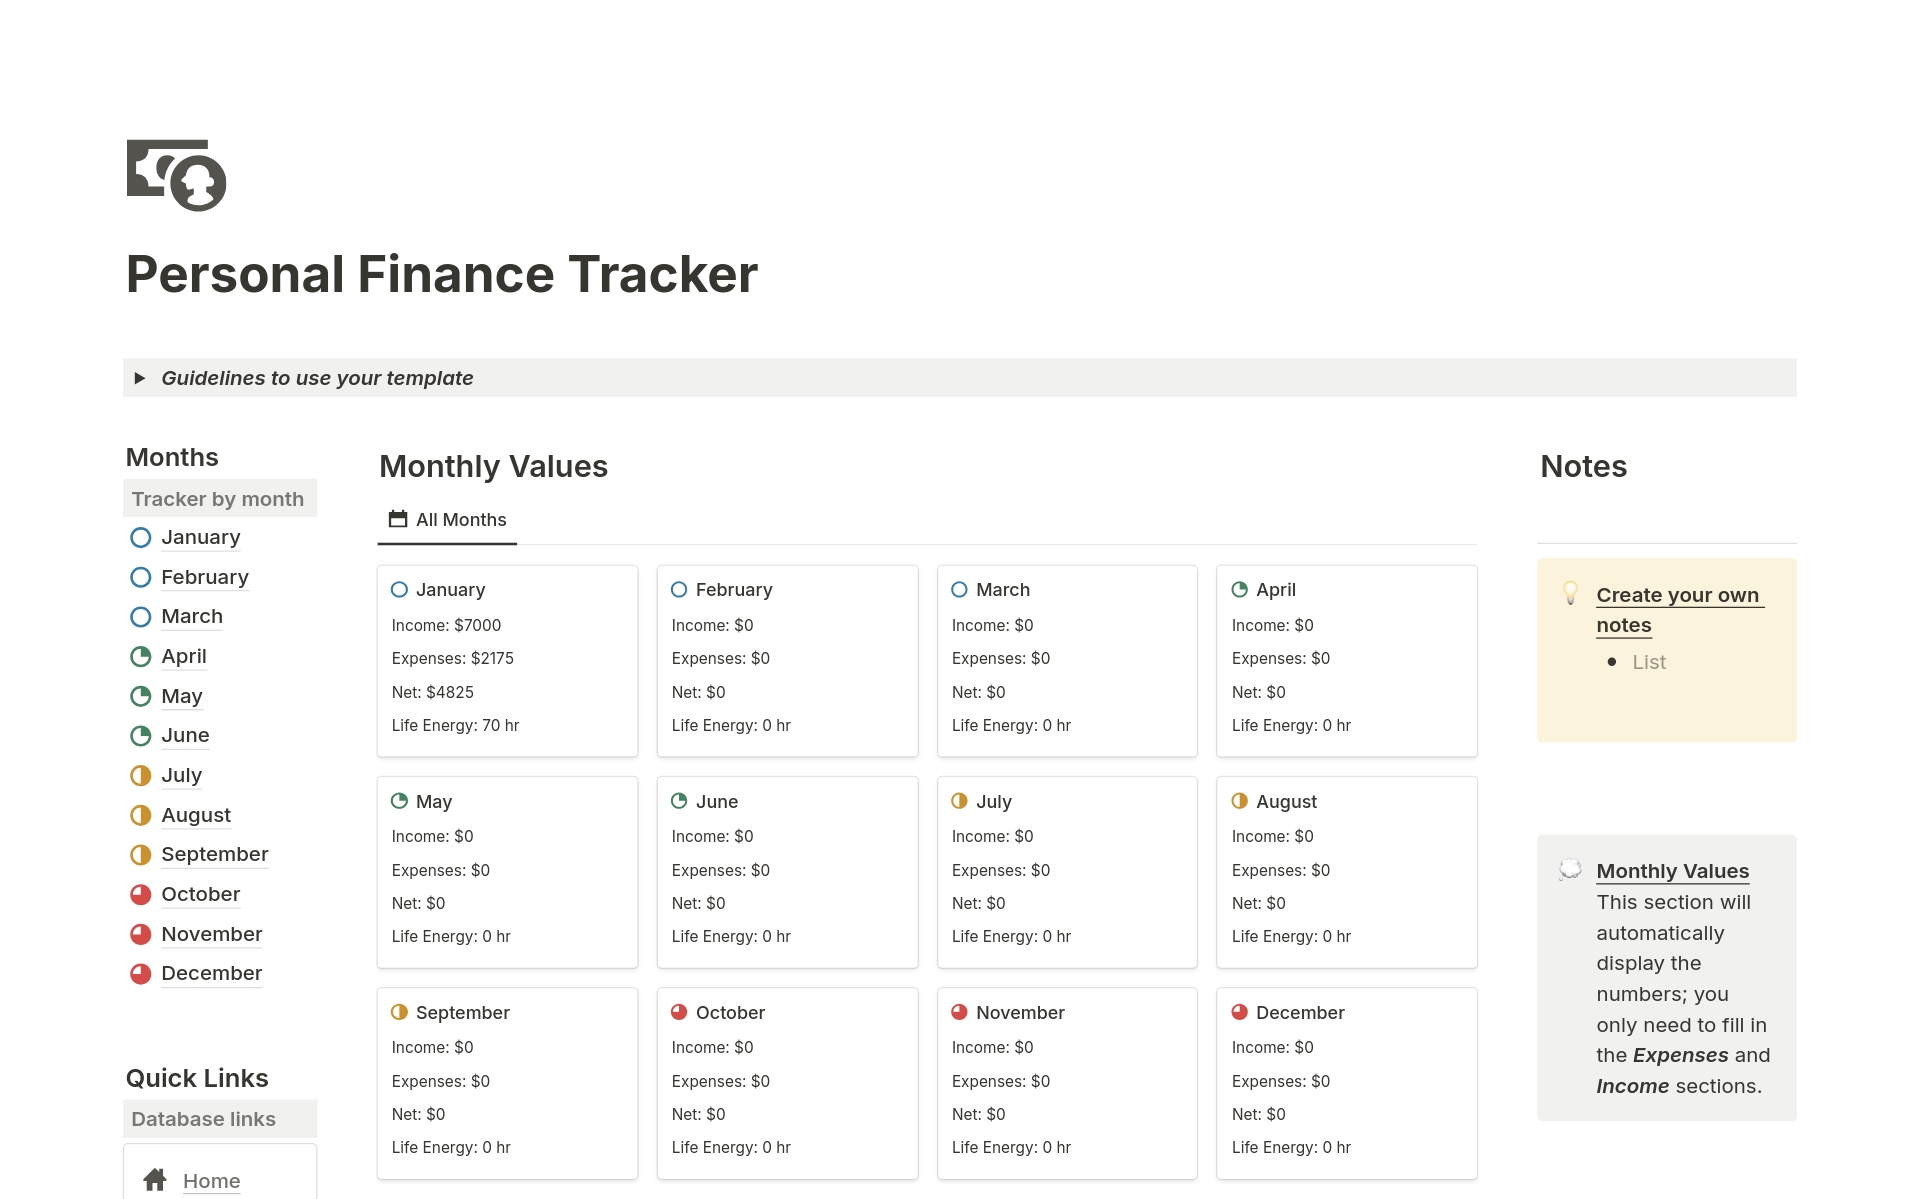 Vista previa de plantilla para Personal Finance Tracker